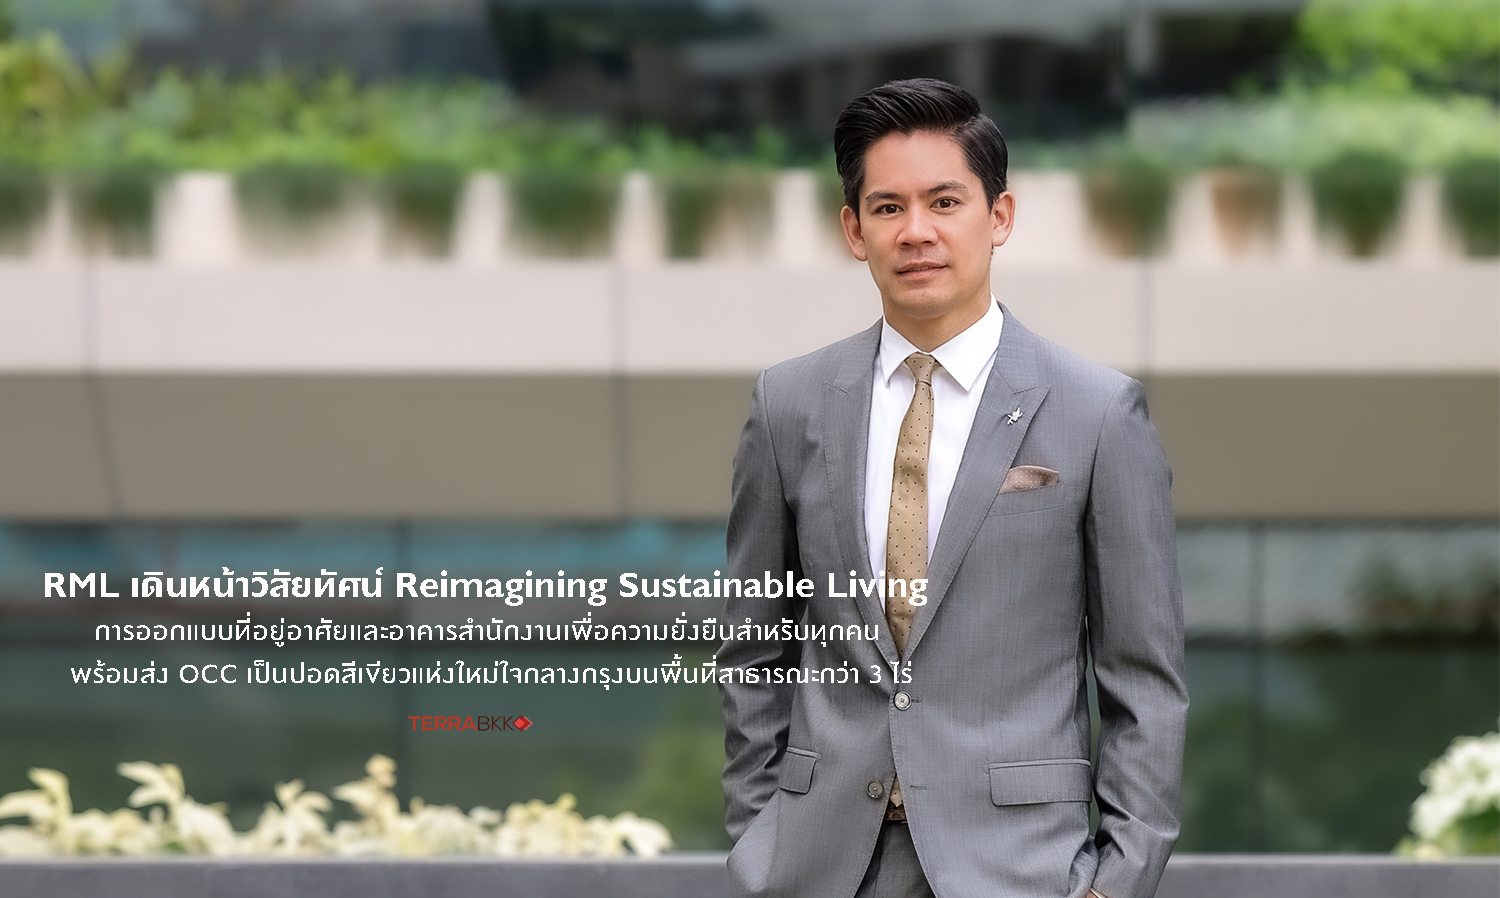 rml-เดินหน้าวิสัยทัศน์-reimagining-sustainable-living-ส่ง